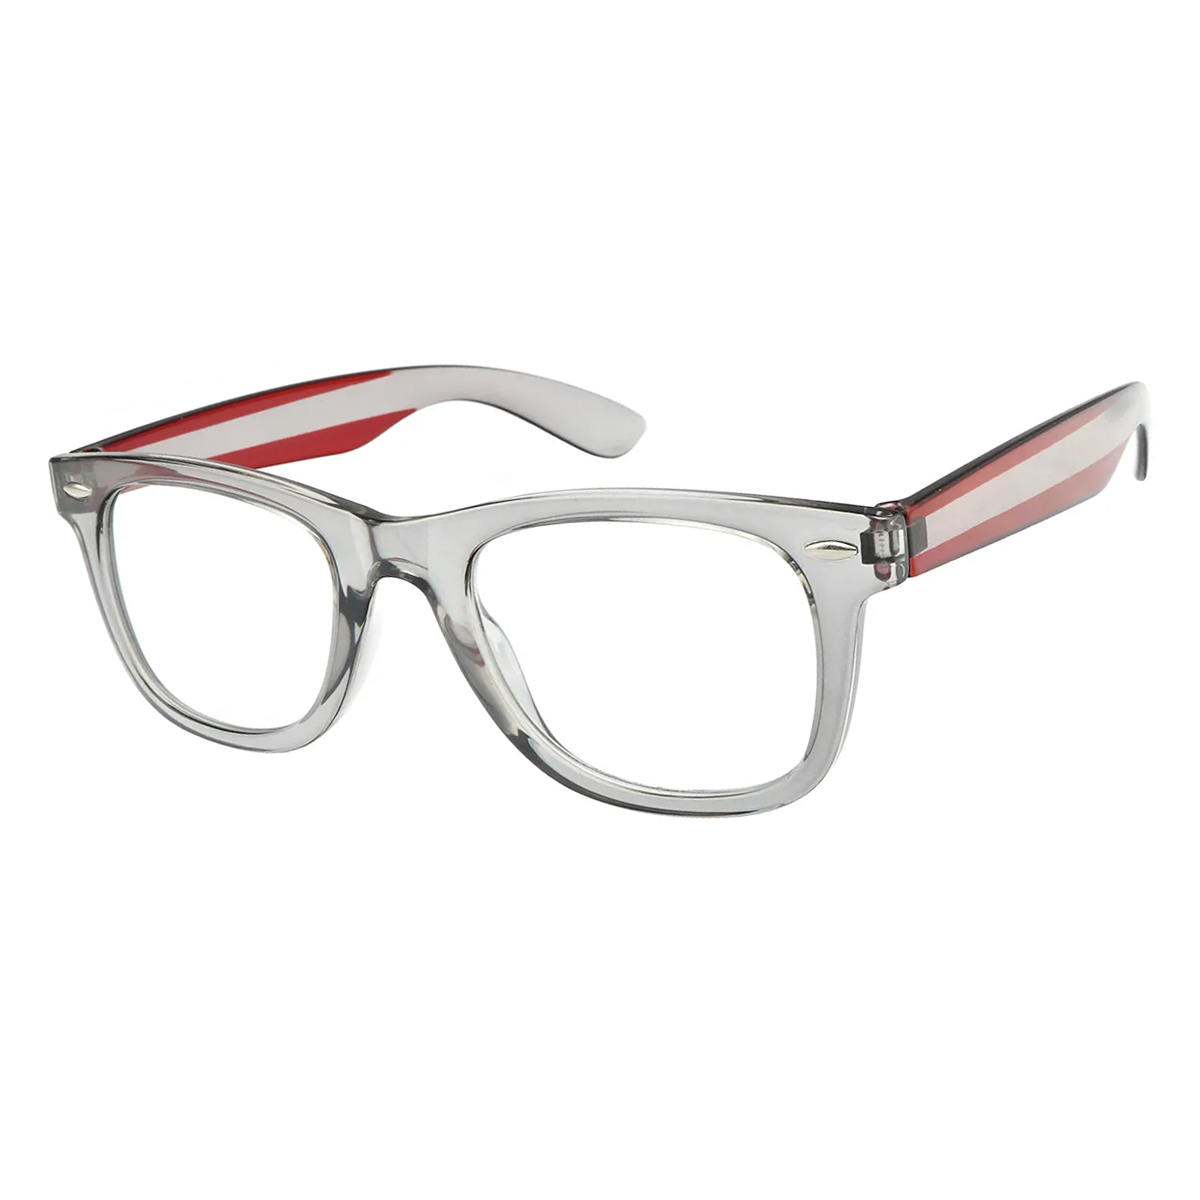 Boho - Square Transparent-Red Reading Glasses for Women